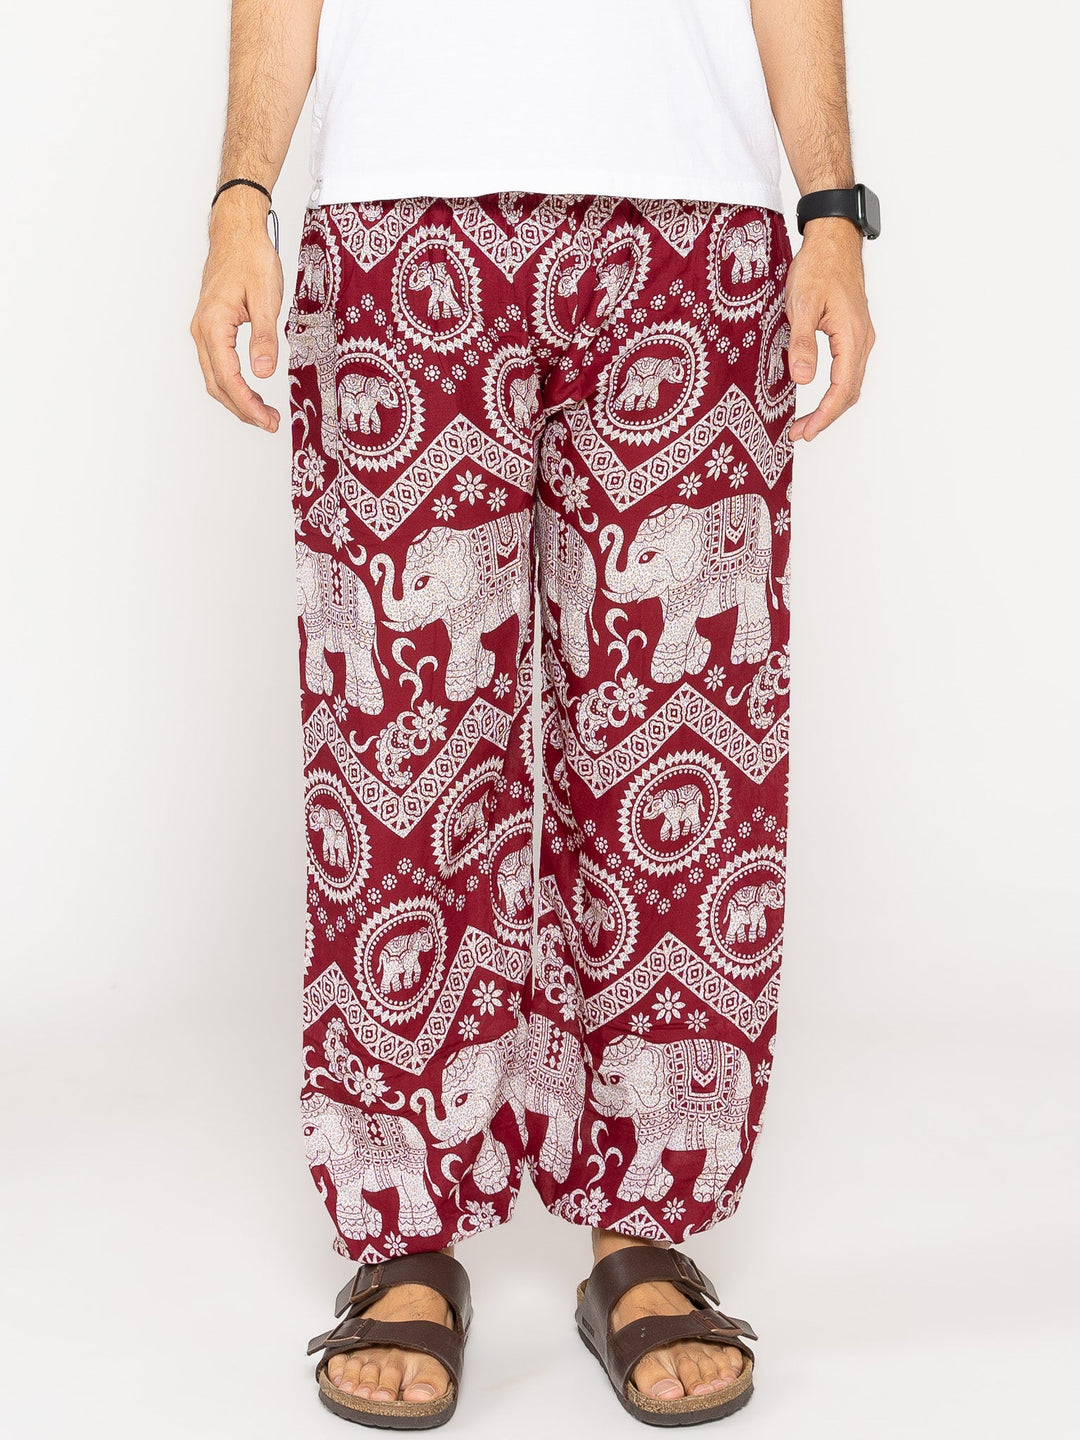 Ahimsa Rojo - Pantsforlove Pantalones anchos, pantalones yoga